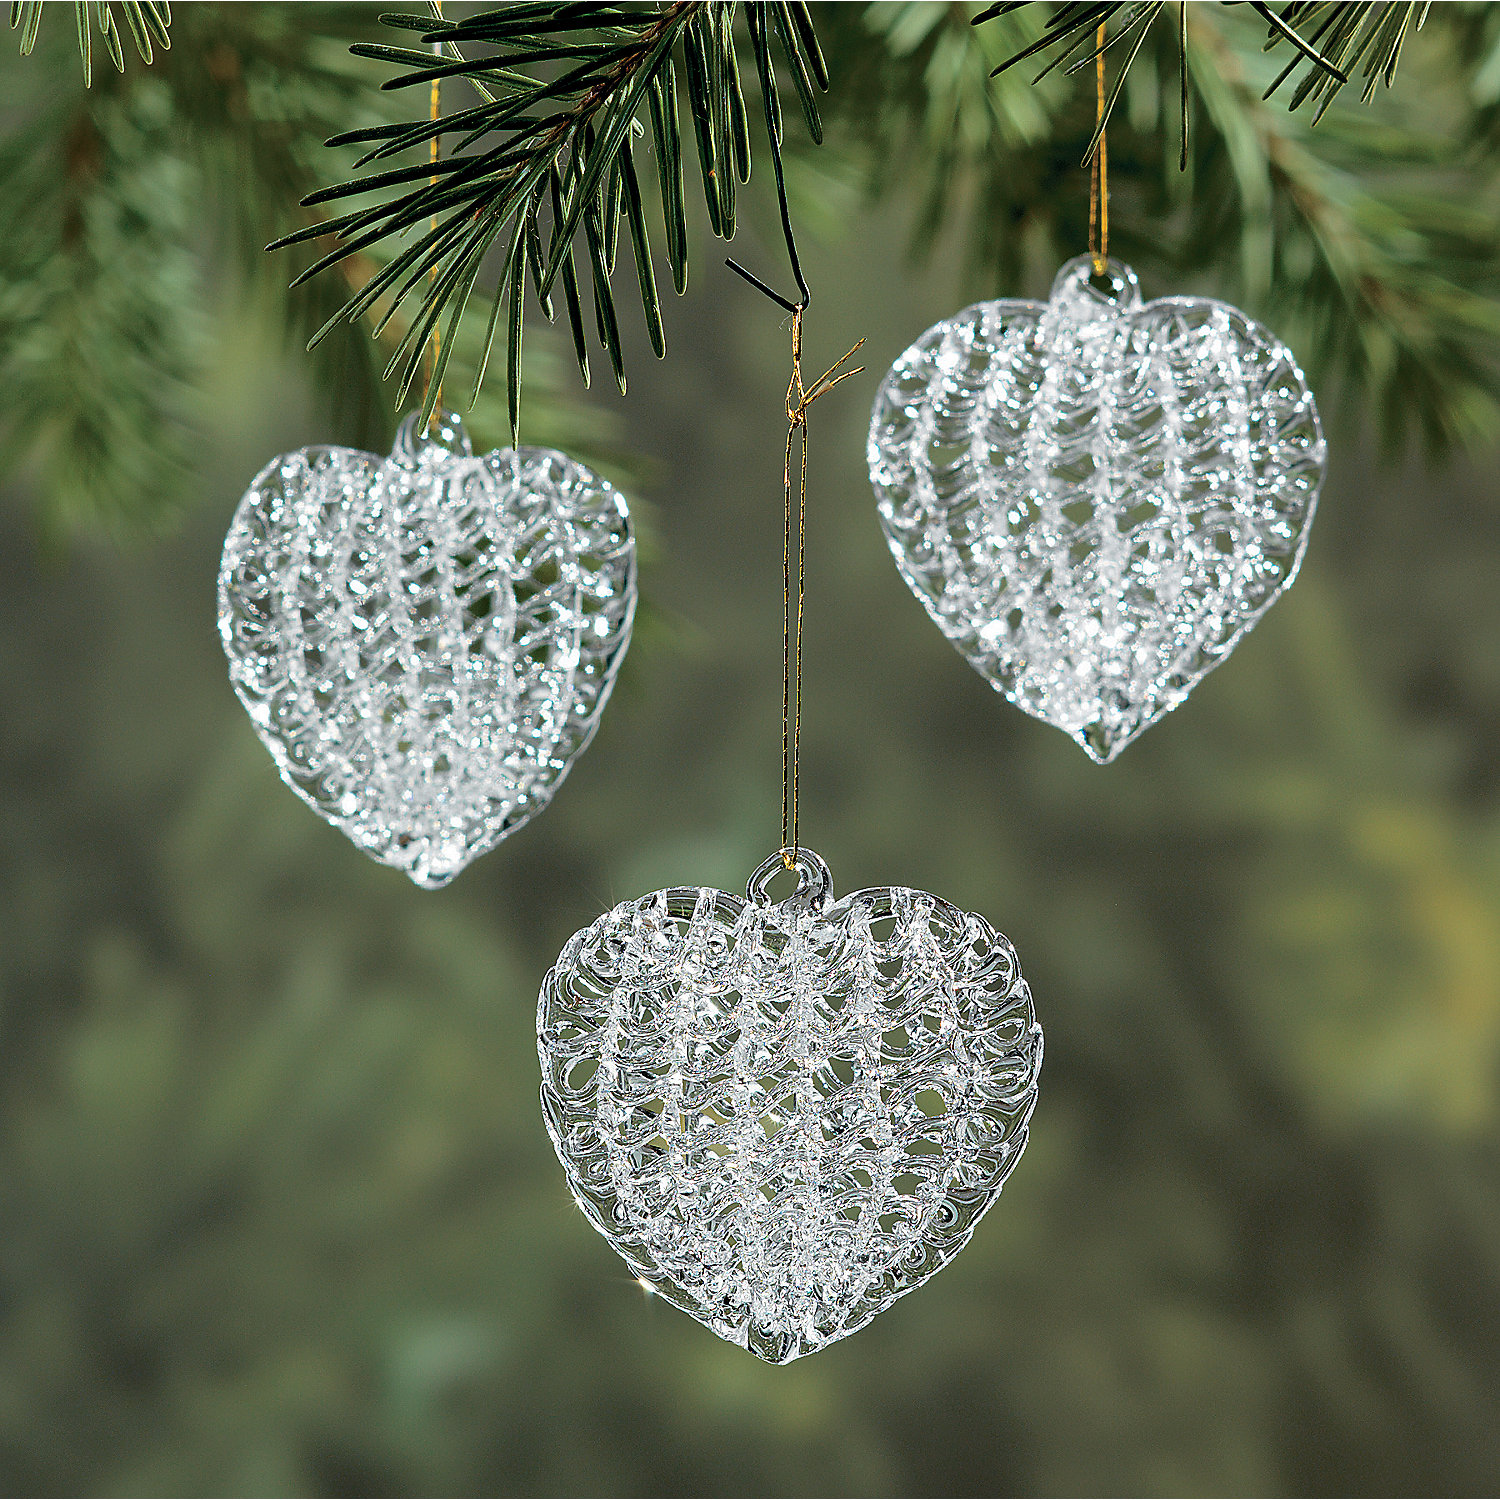 Spun Glass Heart Christmas Ornaments - Home Decor - 12 ...